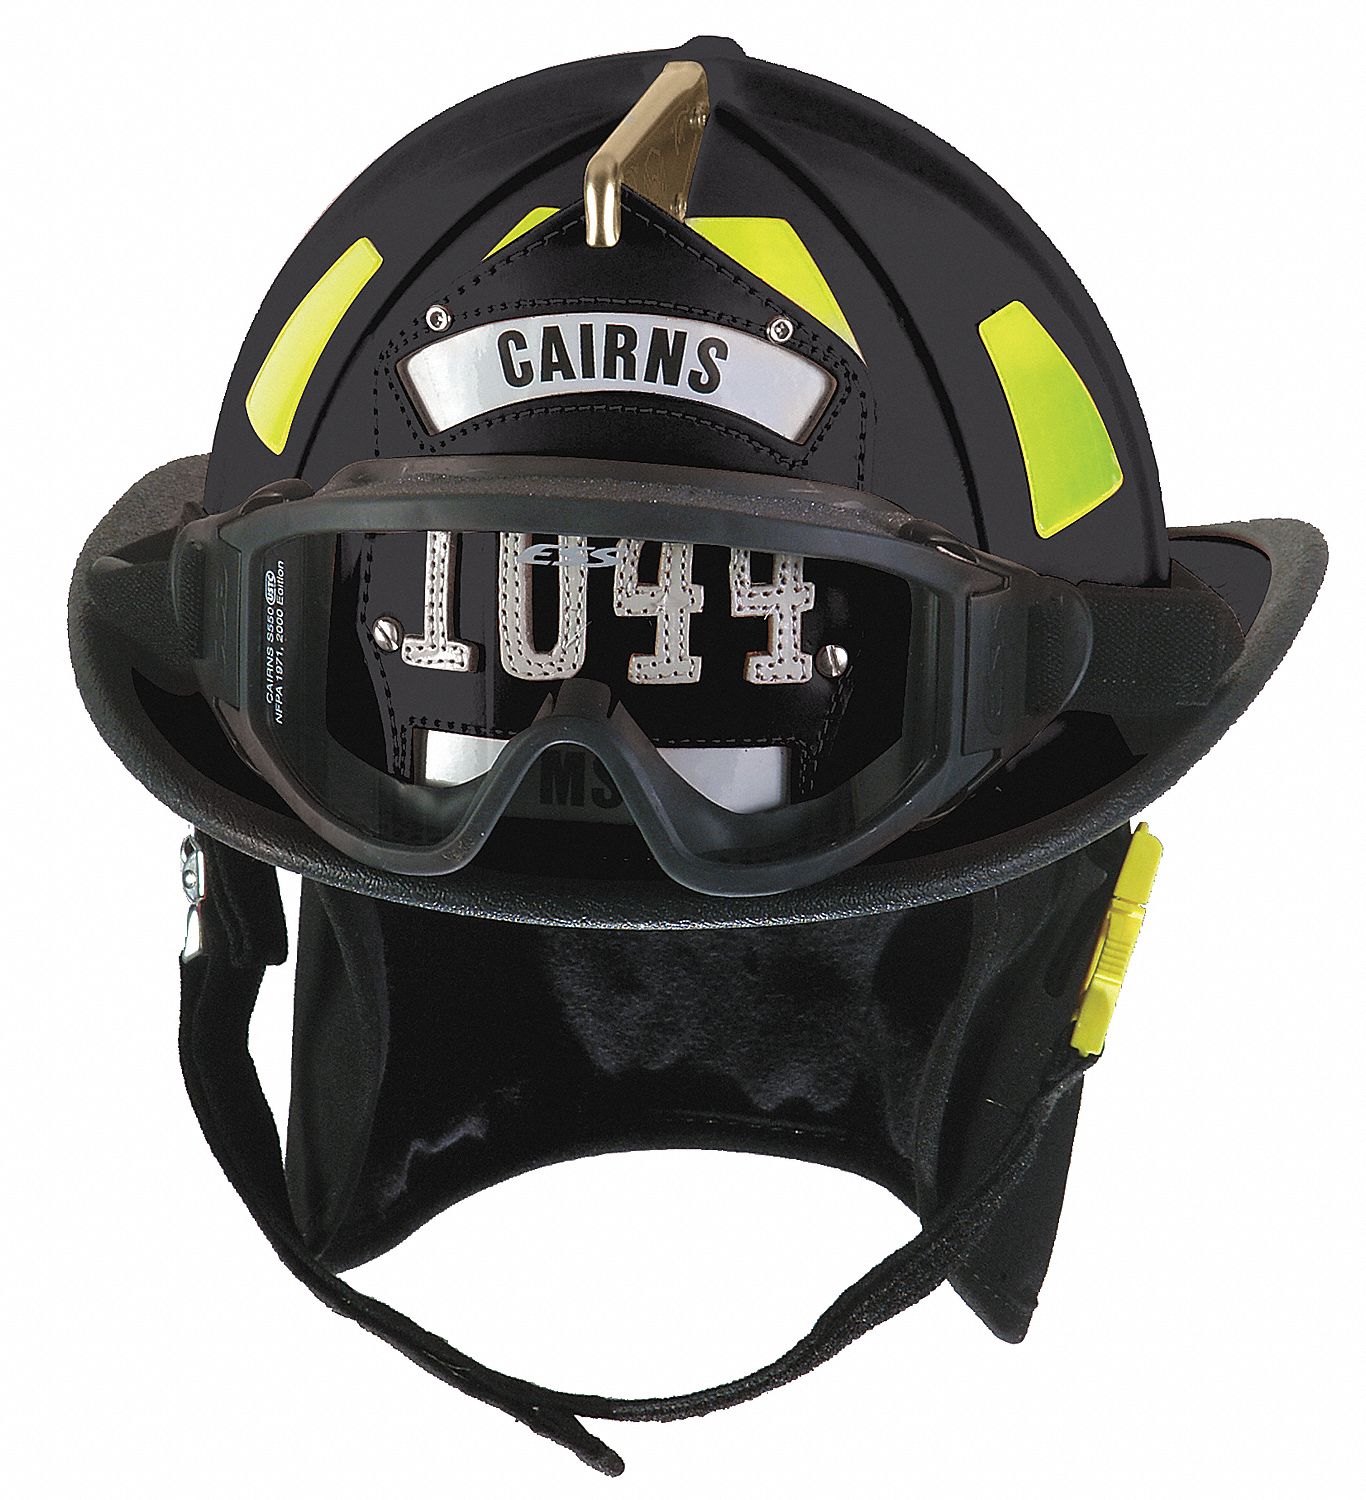 Black Fire Helmet, Shell Material: Fiberglass, Ratchet Suspension, Fits Hat Size: 6-3/8 to 8-3/8"